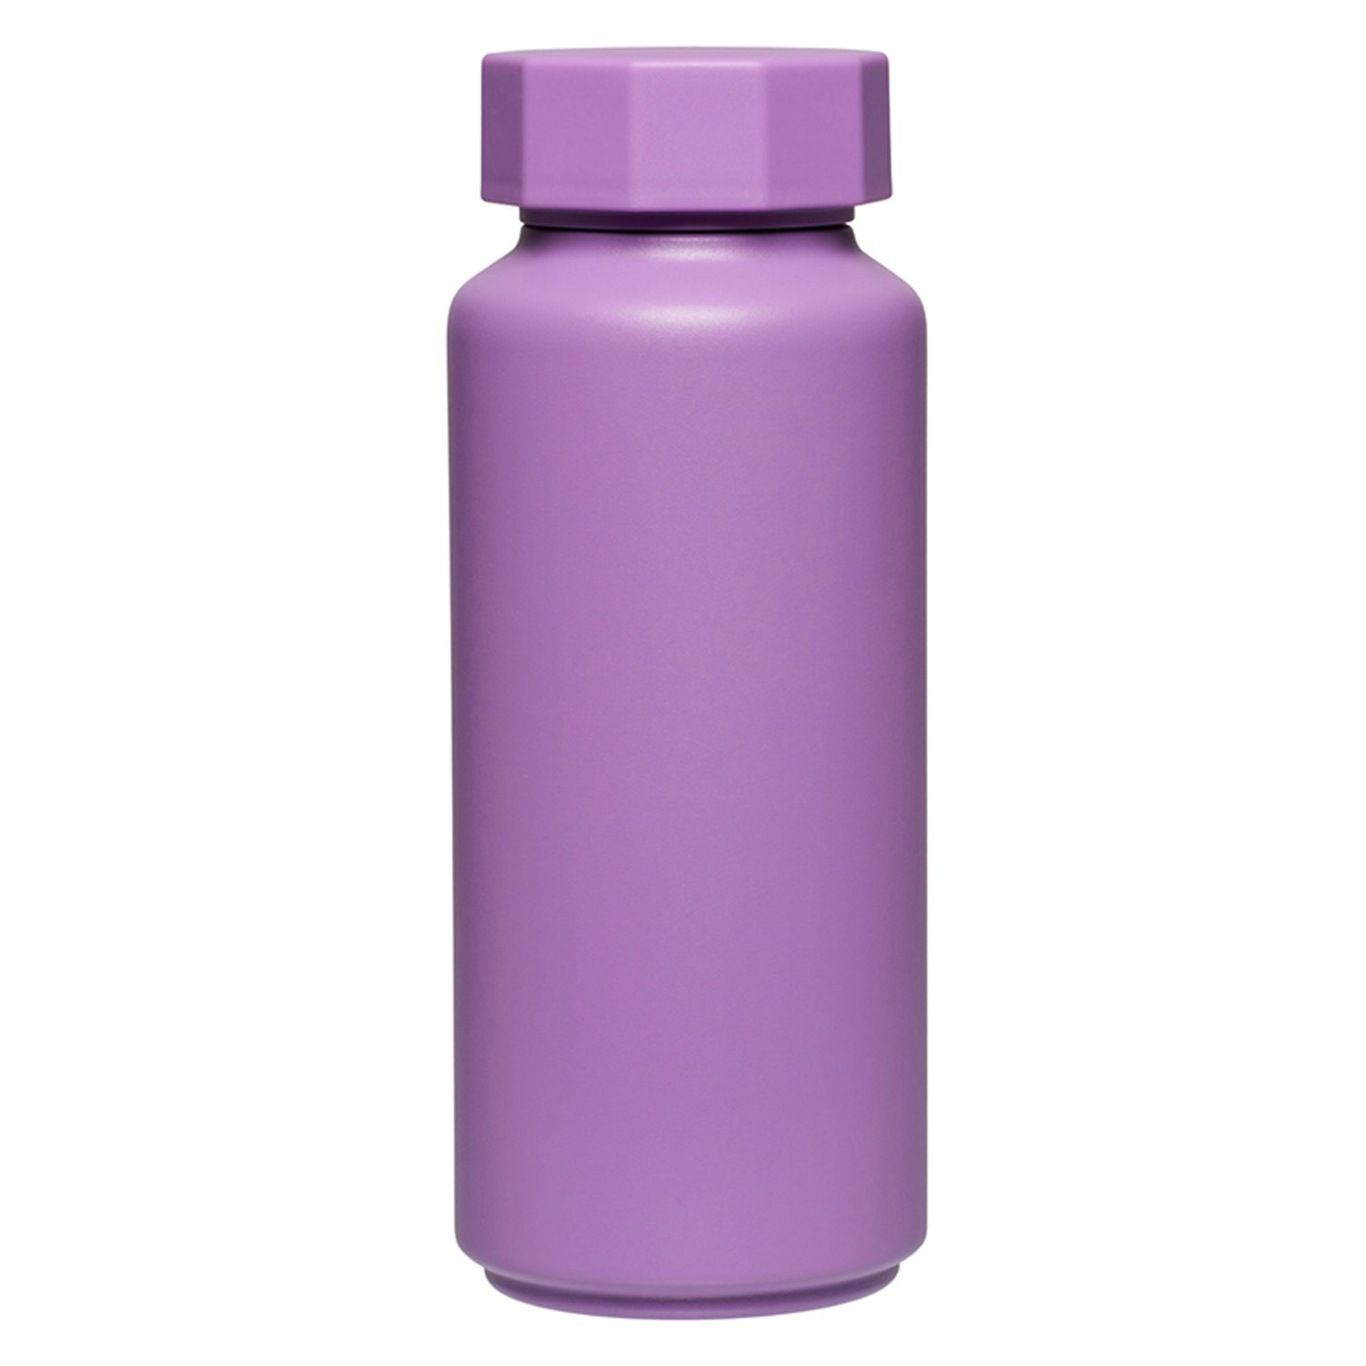 https://royaldesign.com/image/2/design-letters-thermos-bottle-50-cl-22?w=800&quality=80